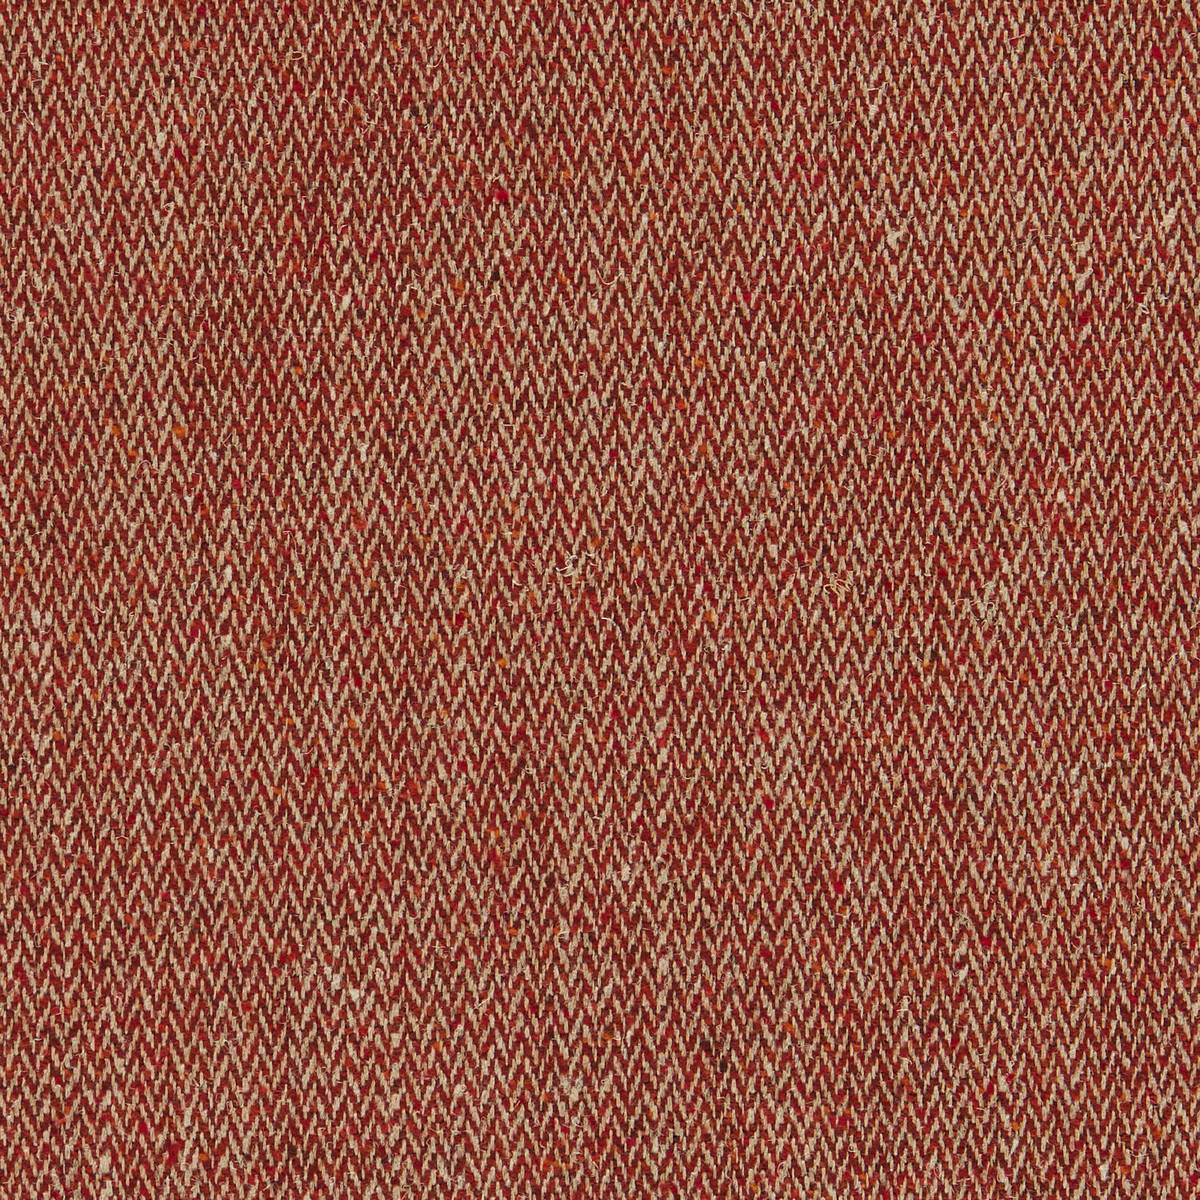 Brunswick Russet Fabric by William Morris & Co.